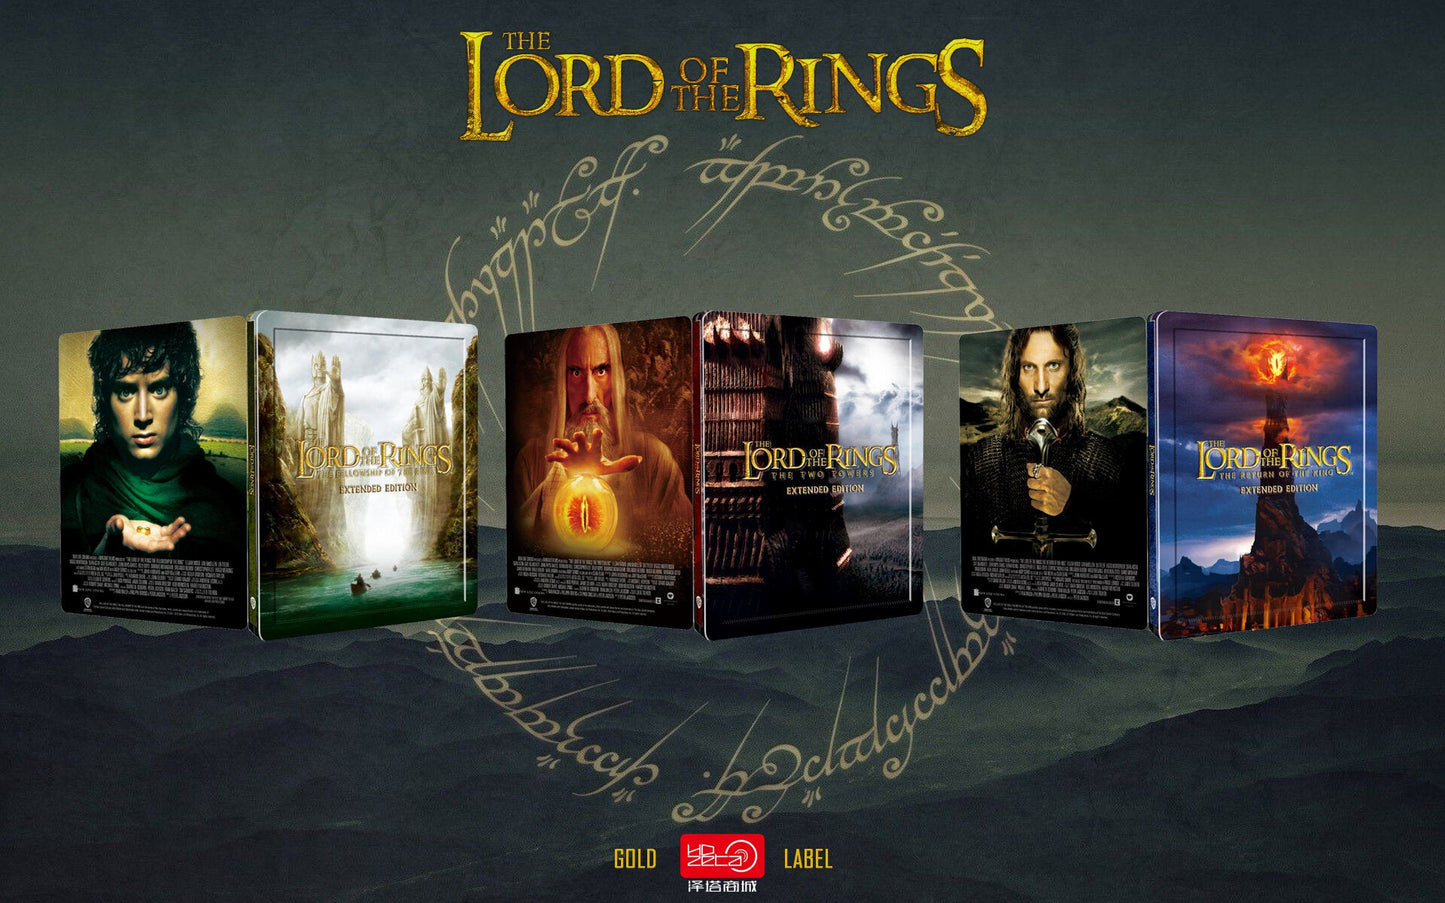 Lord Of The Rings Trilogy 4K Blu-ray Steelbook HDZeta Exclusive Gold Label Lenticular Slip Set